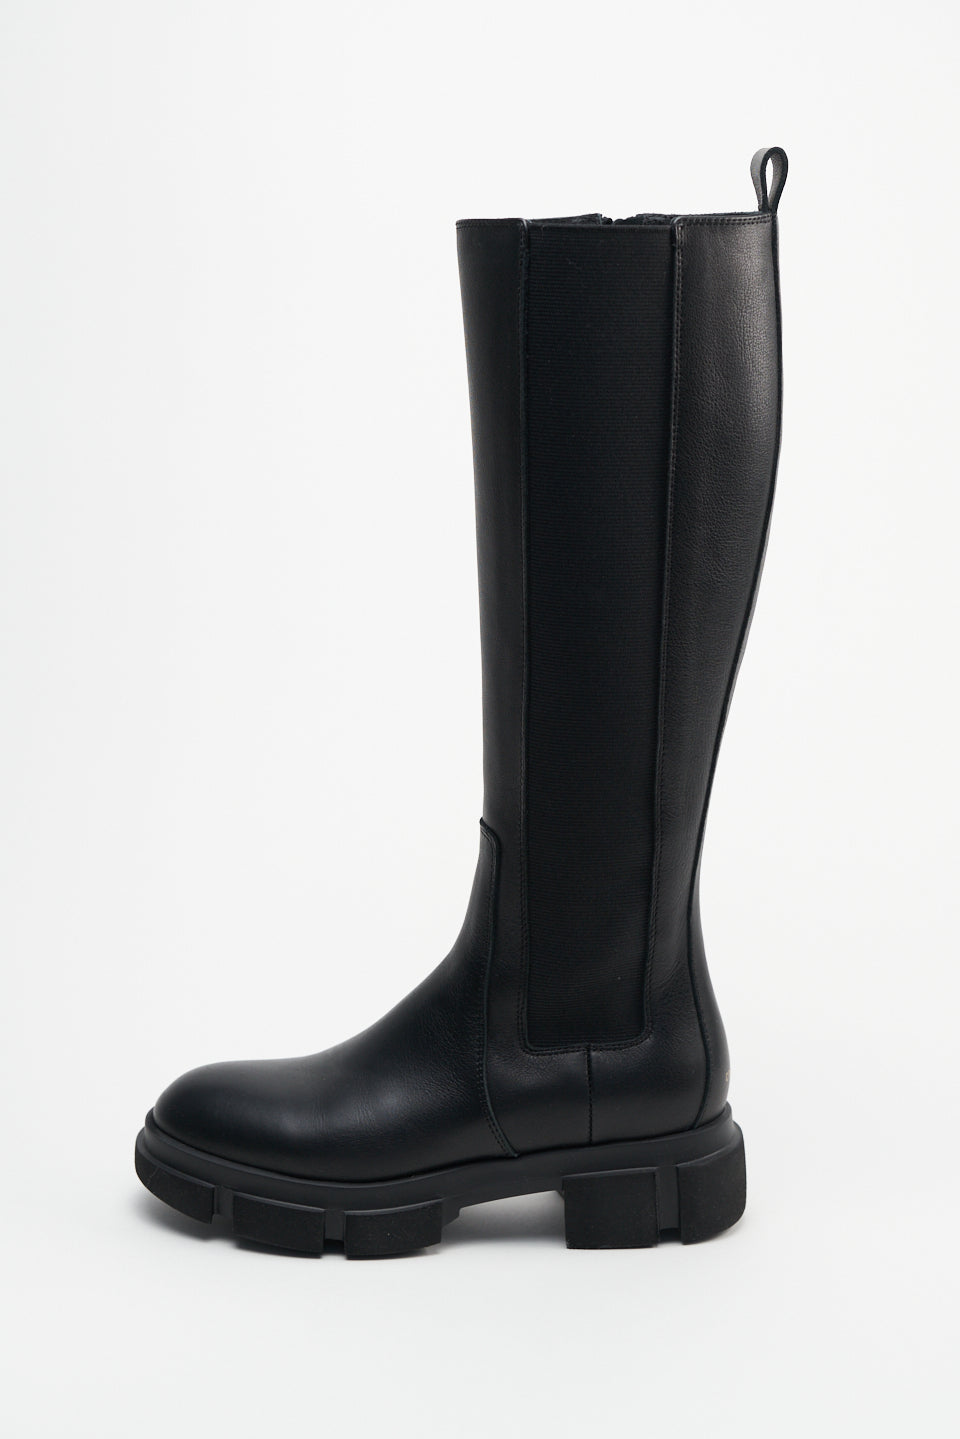 Vitello Black High Chelsea Boots CPH667BLACK - 4